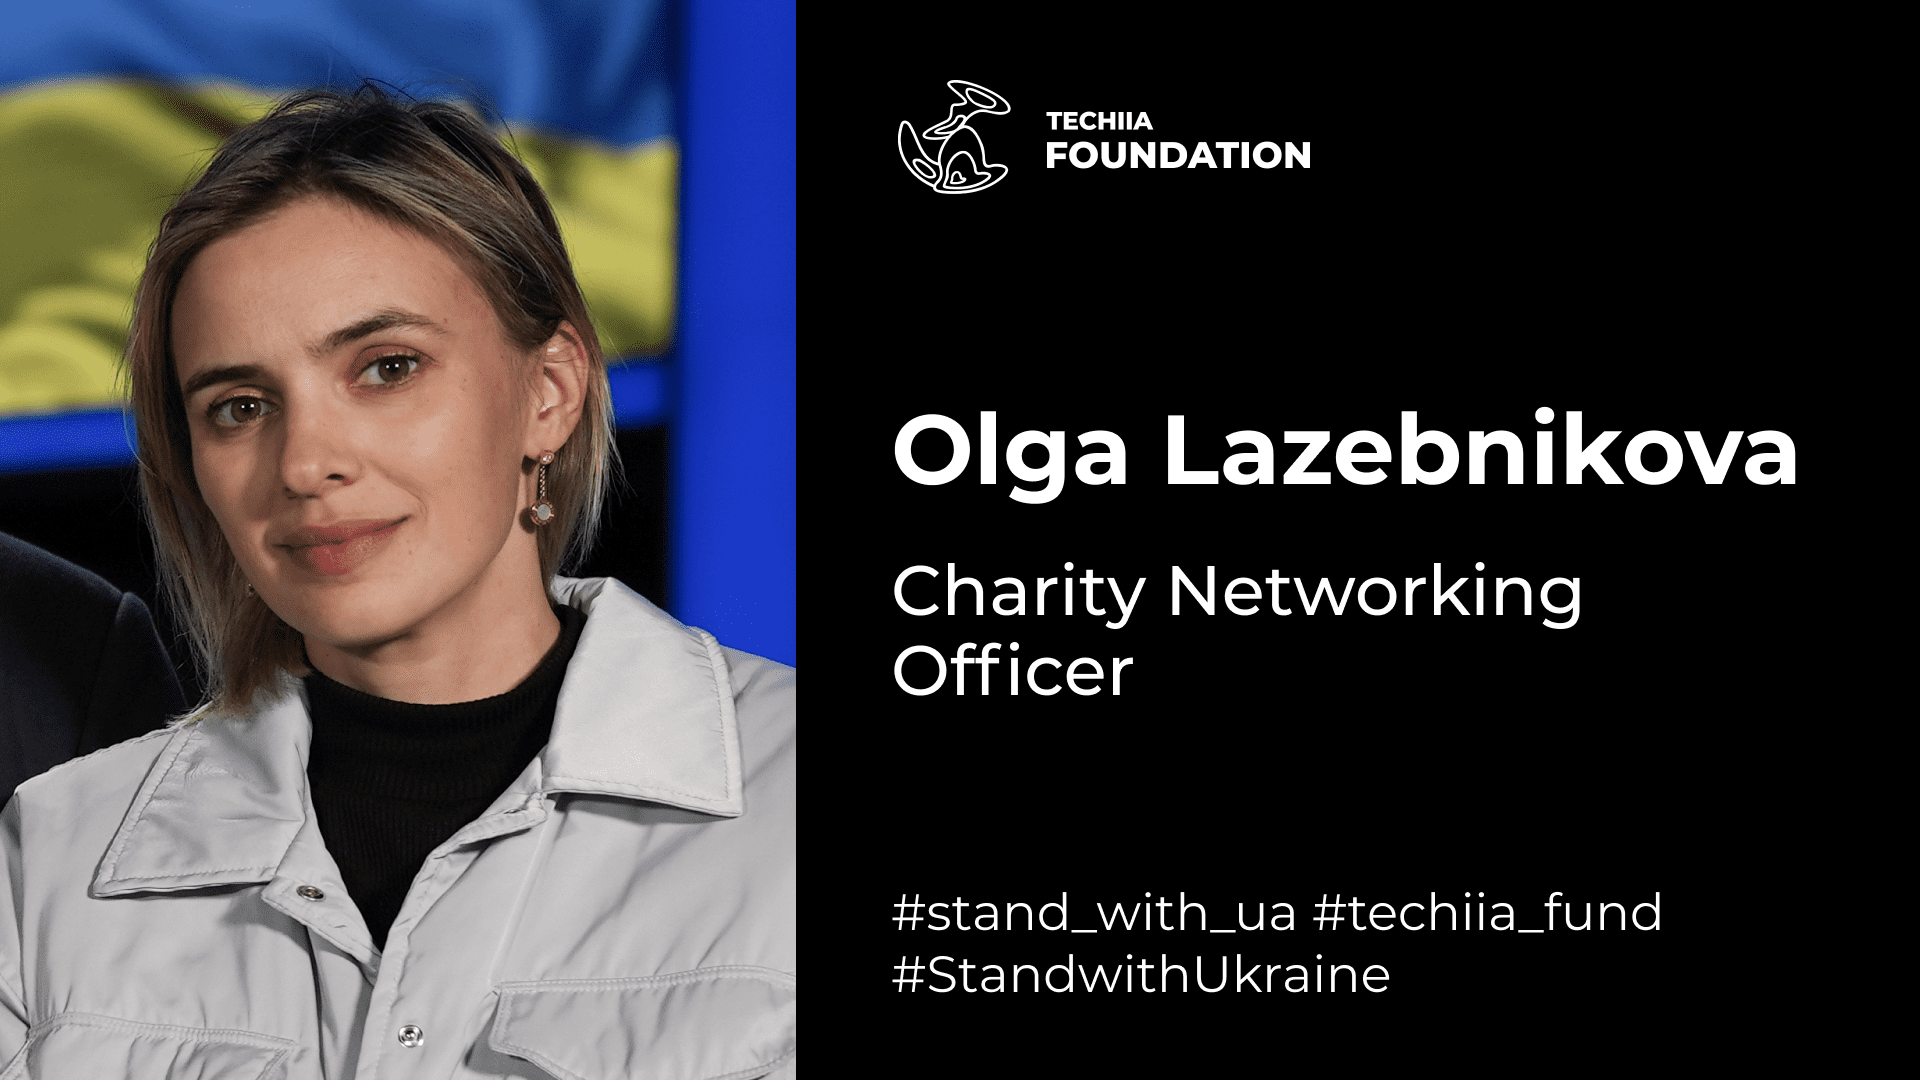 Olga Bulygina-Lazebnikova recorded an appeal for the #StandwithUkraine initiative